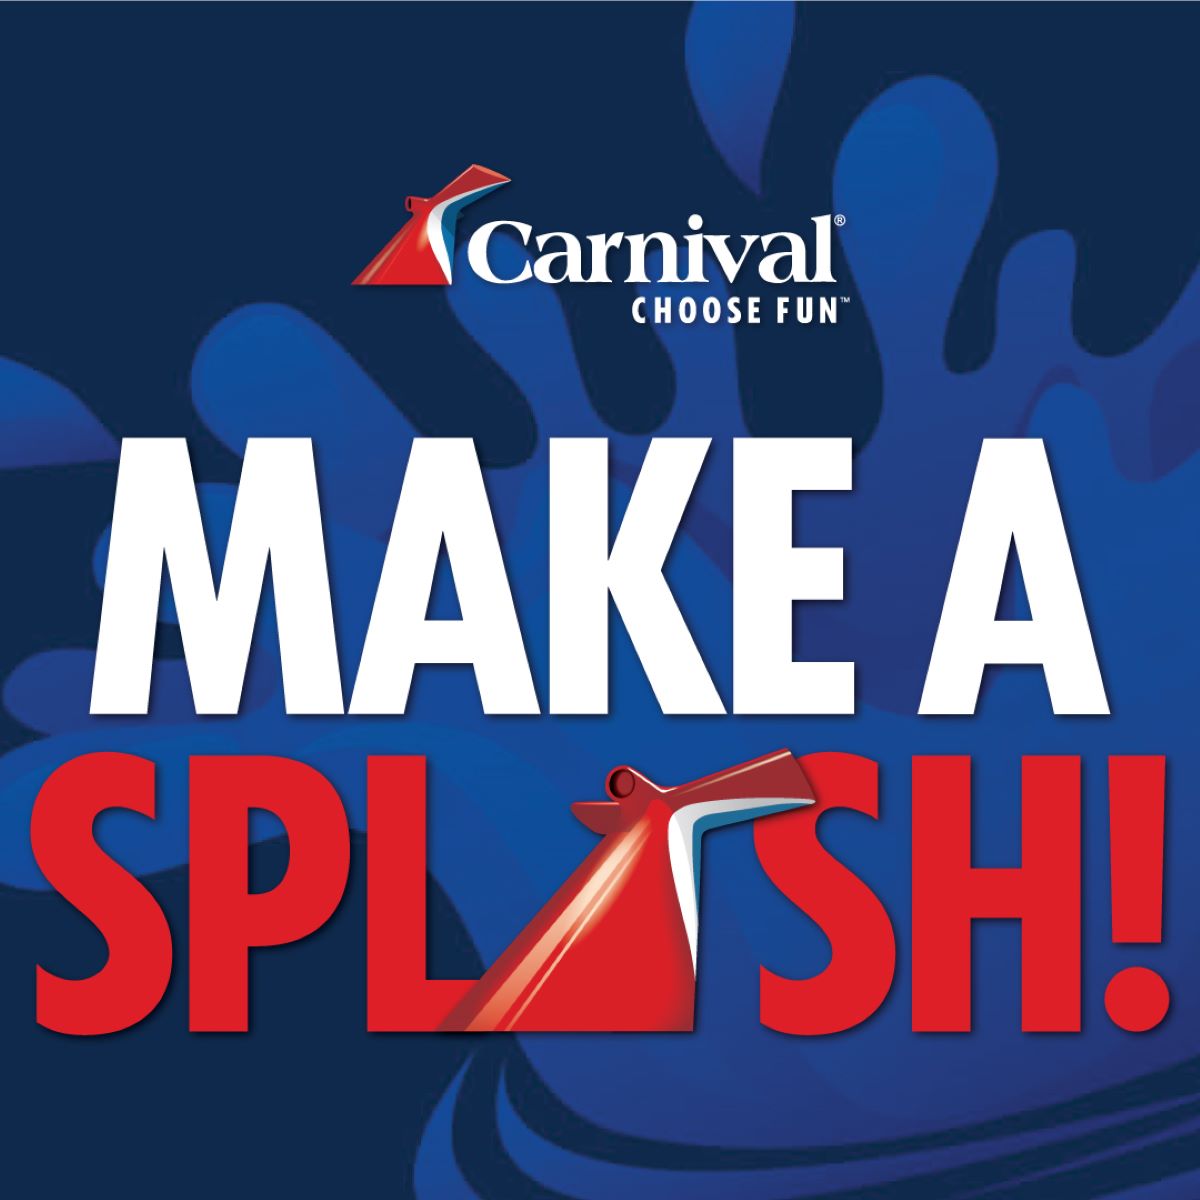 Carnival Make a Splash